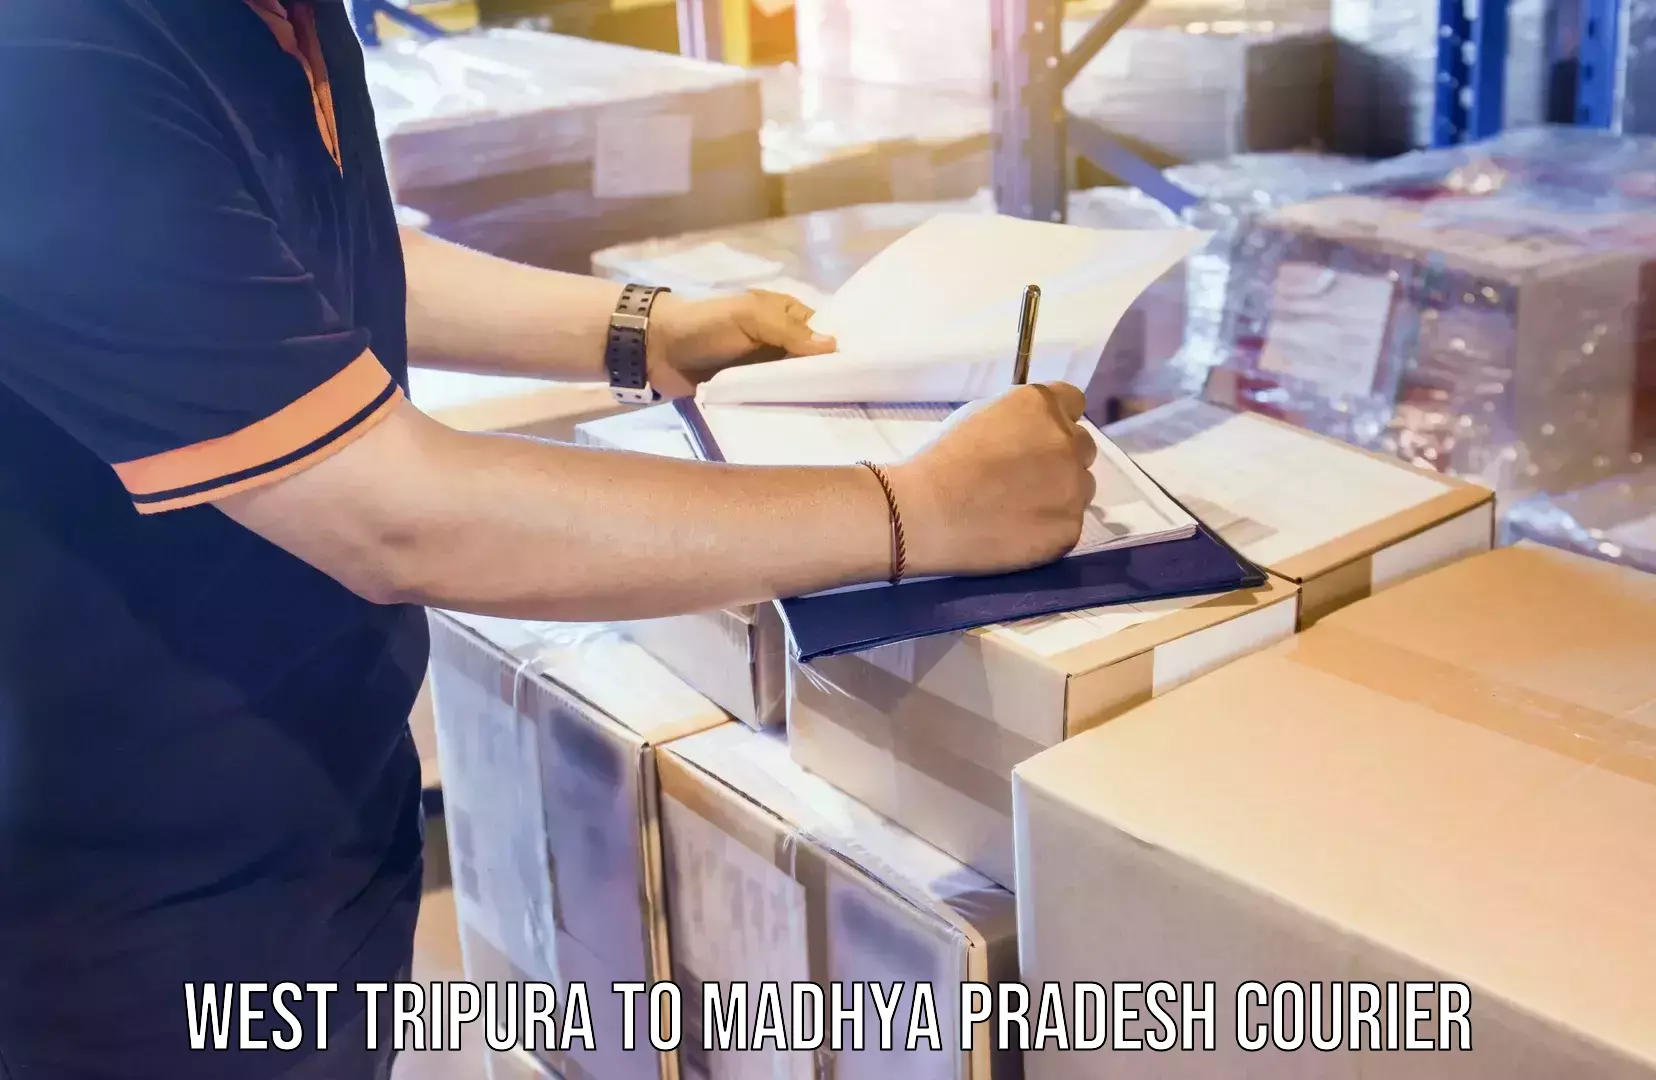 Professional courier handling West Tripura to Madhya Pradesh